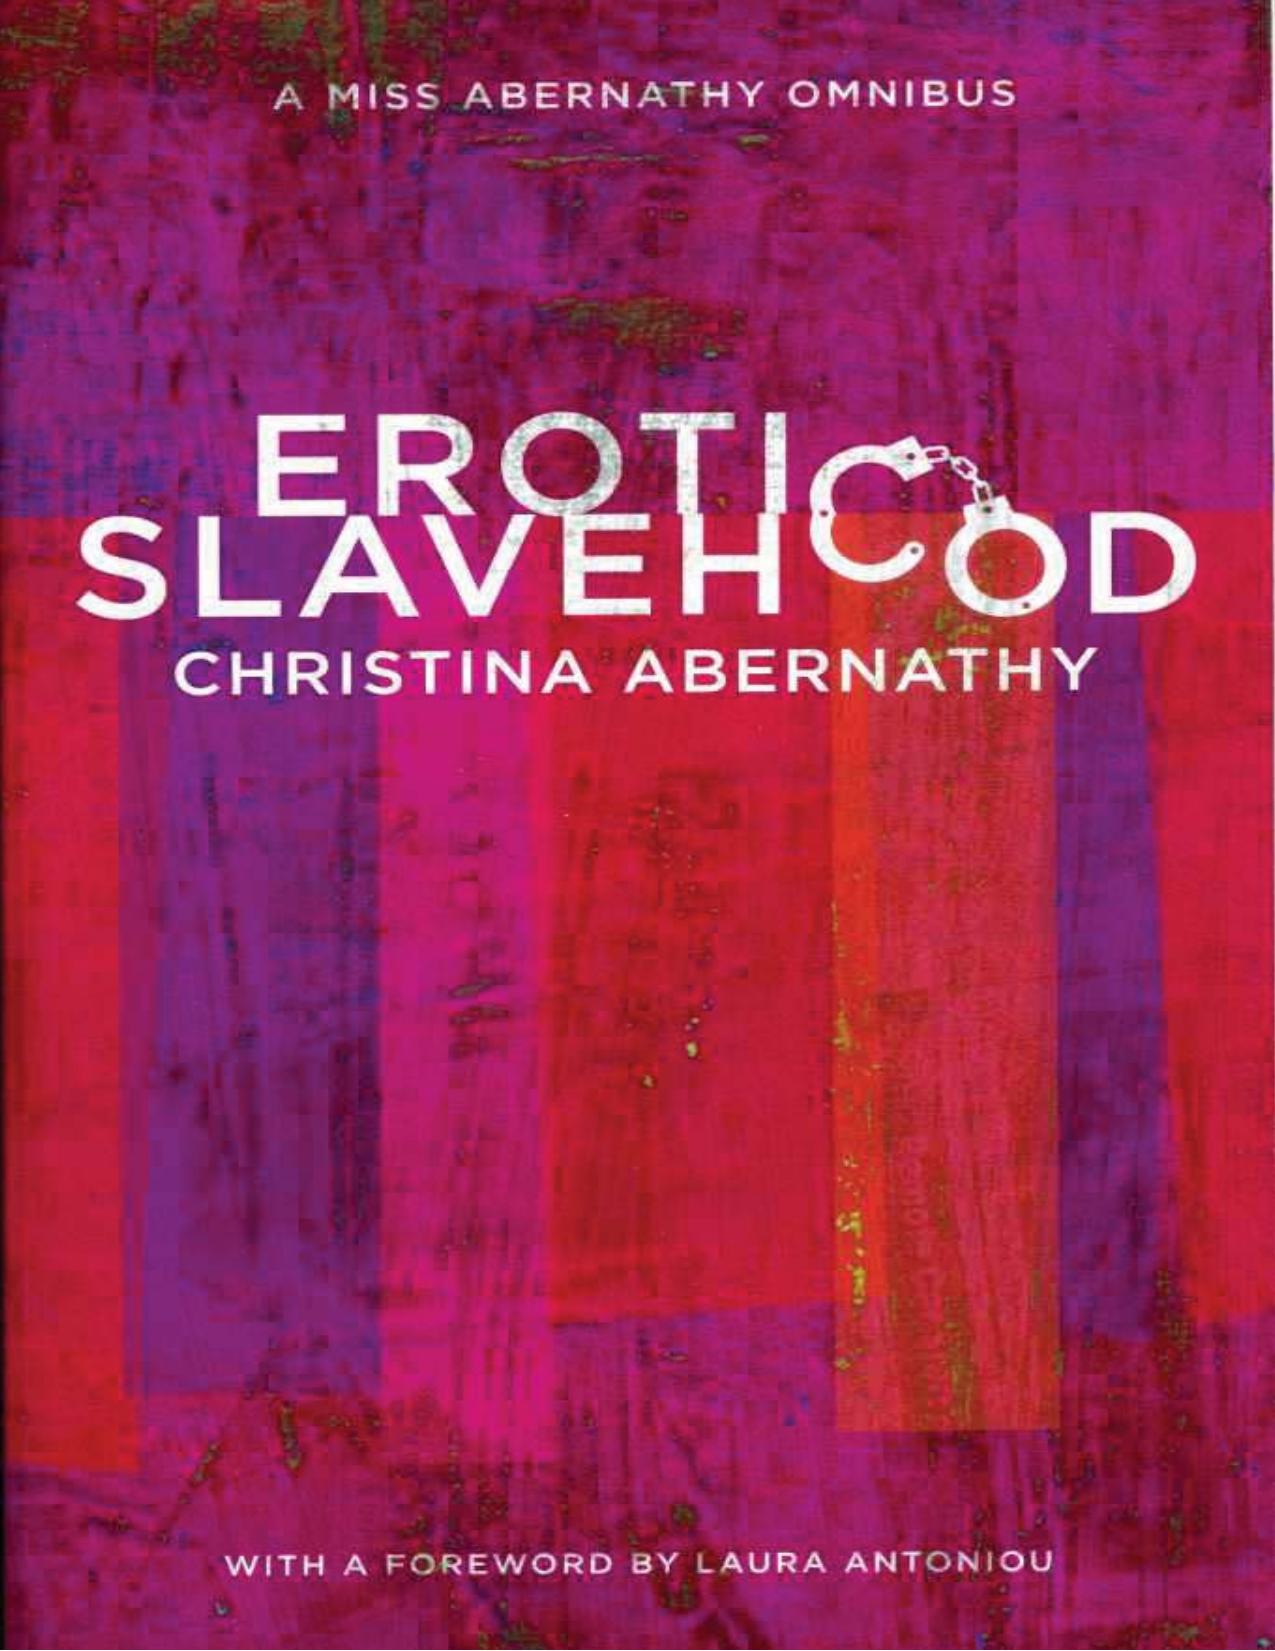 Erotic Slavehood: a Miss Abernathy omnibus by Christina Abernathy